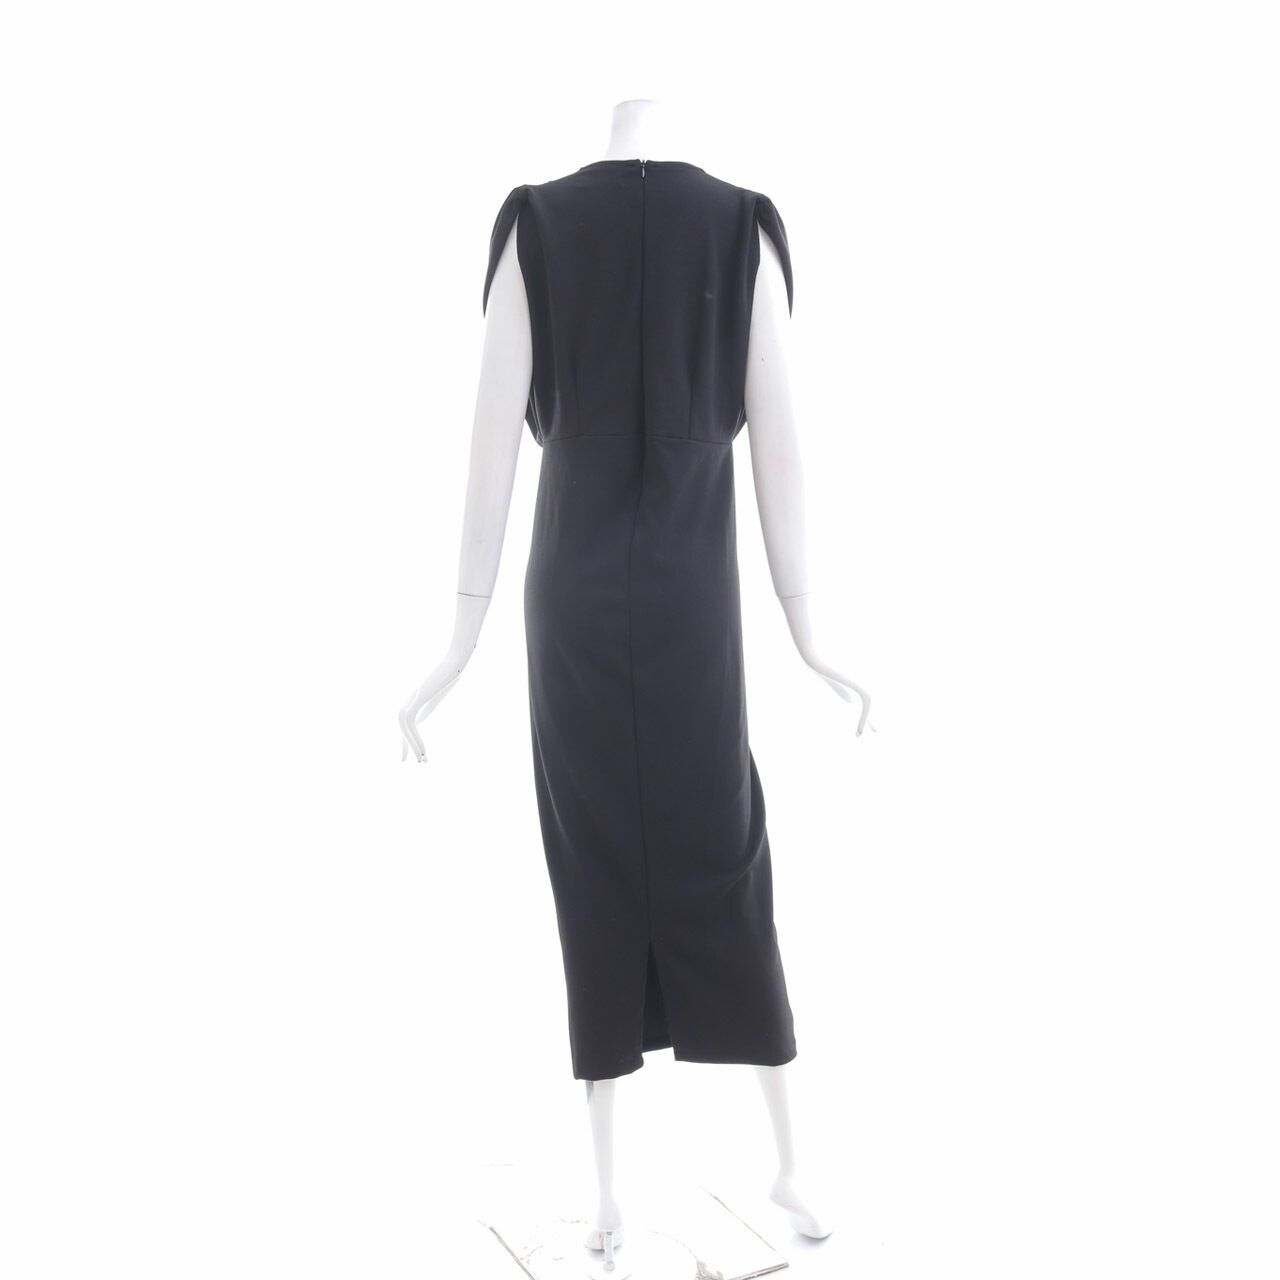 AVGAL Black Midi Dress